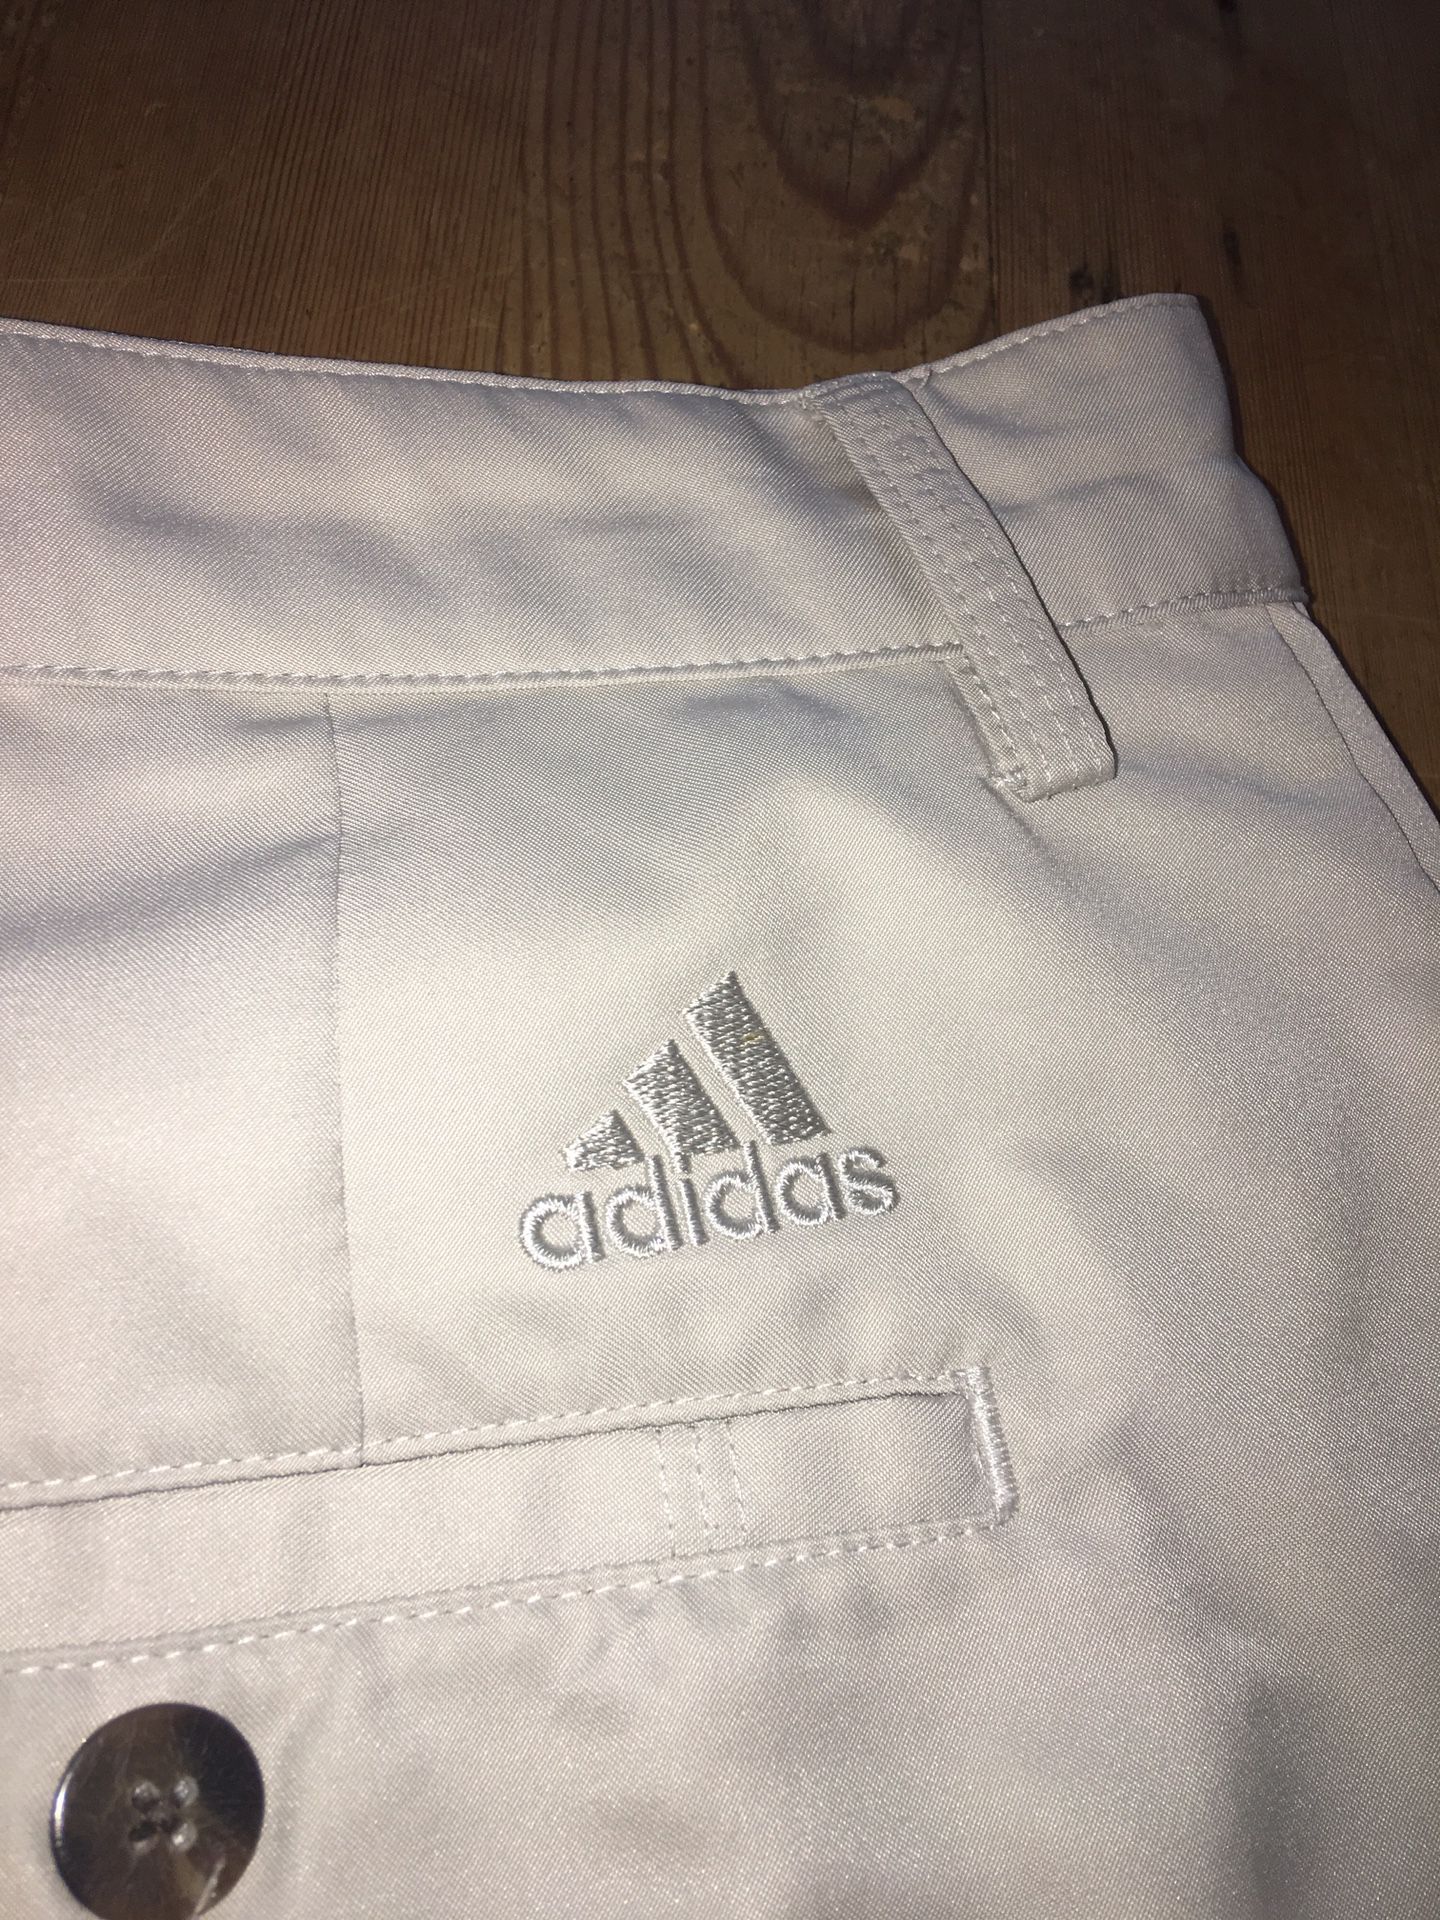 Adidas Golf Shorts, Size 36, $12